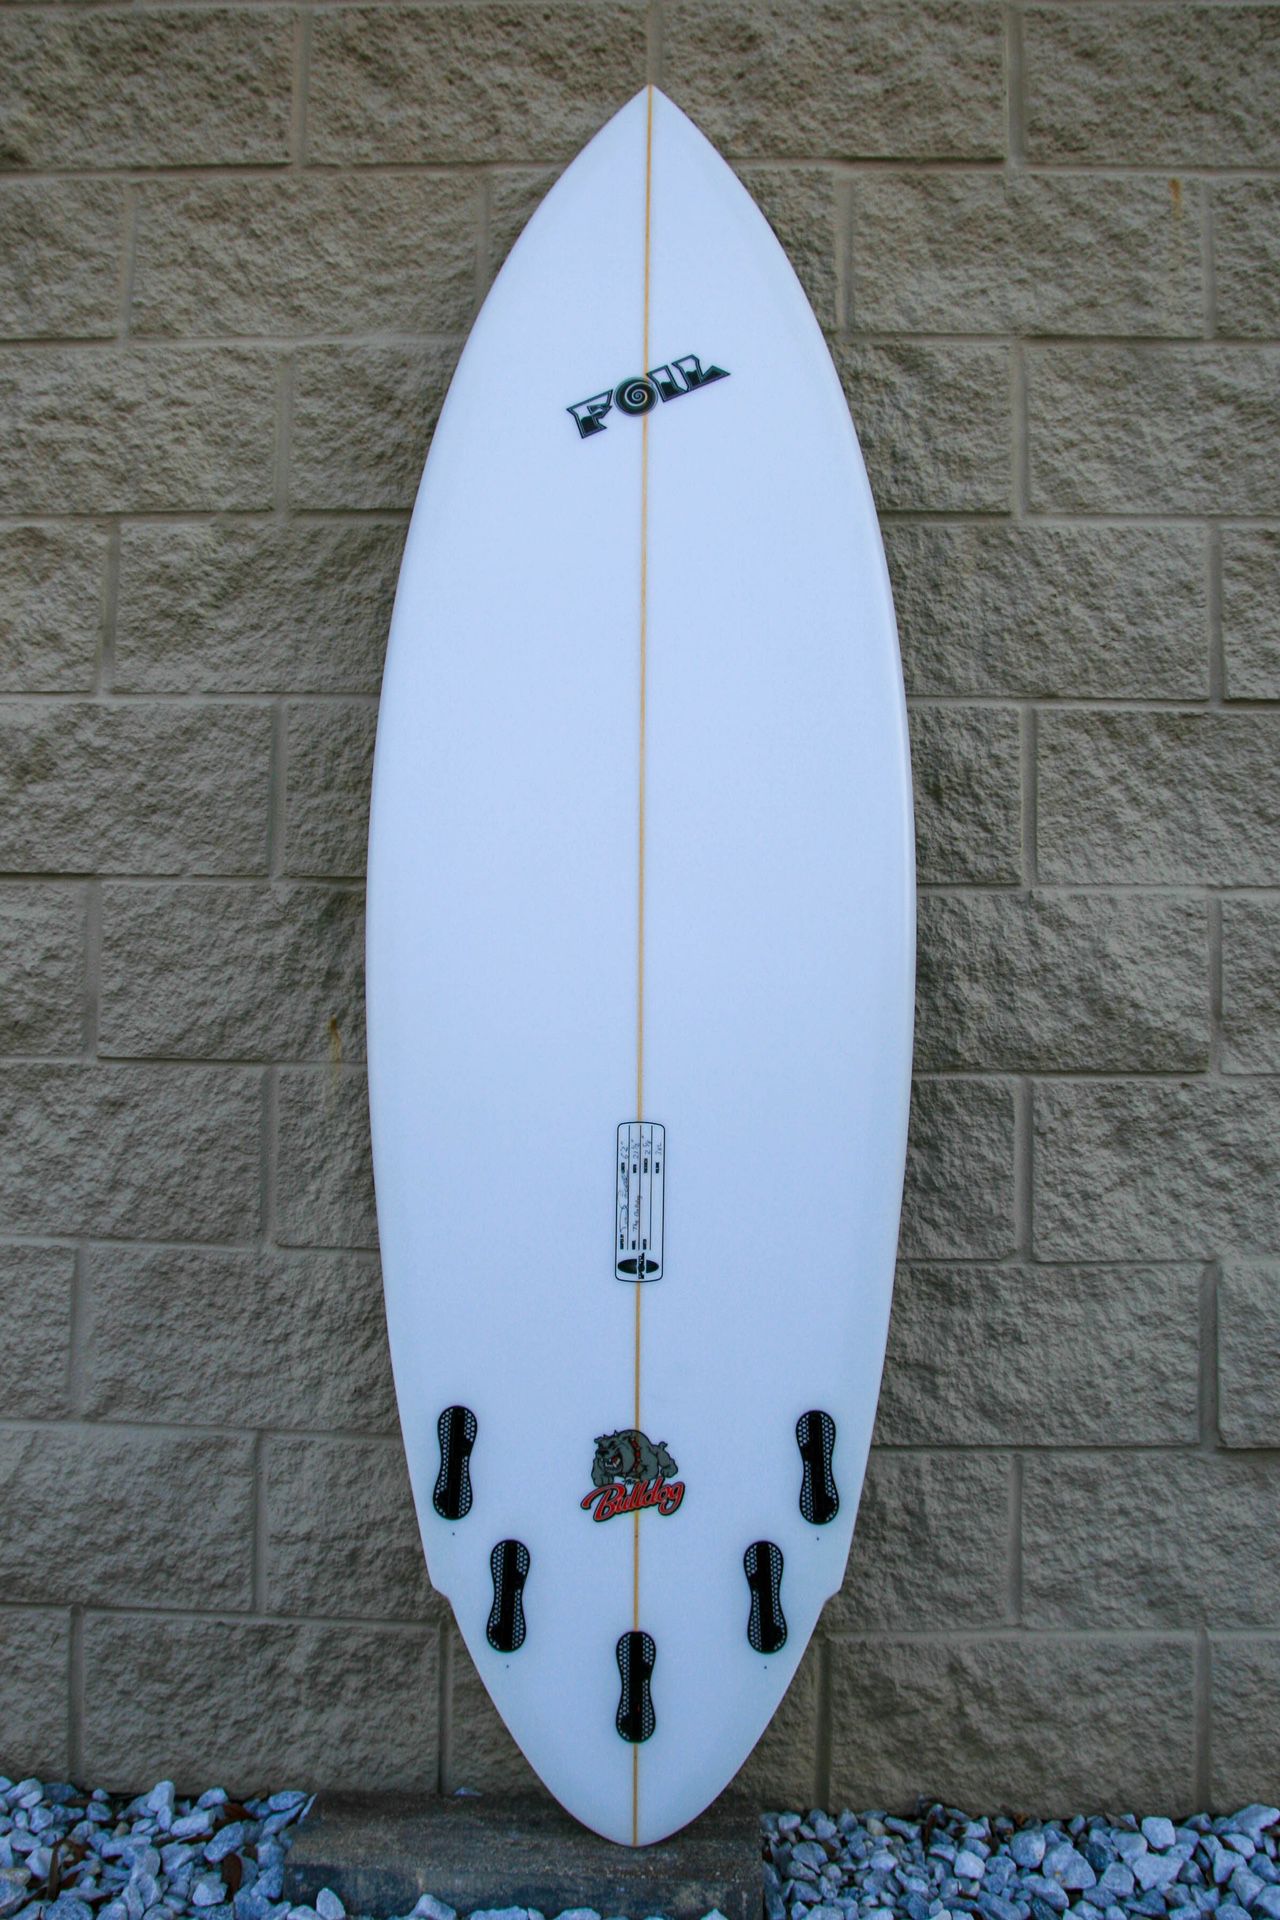 FOIL “The Bulldog” Model Short Board Surfboard